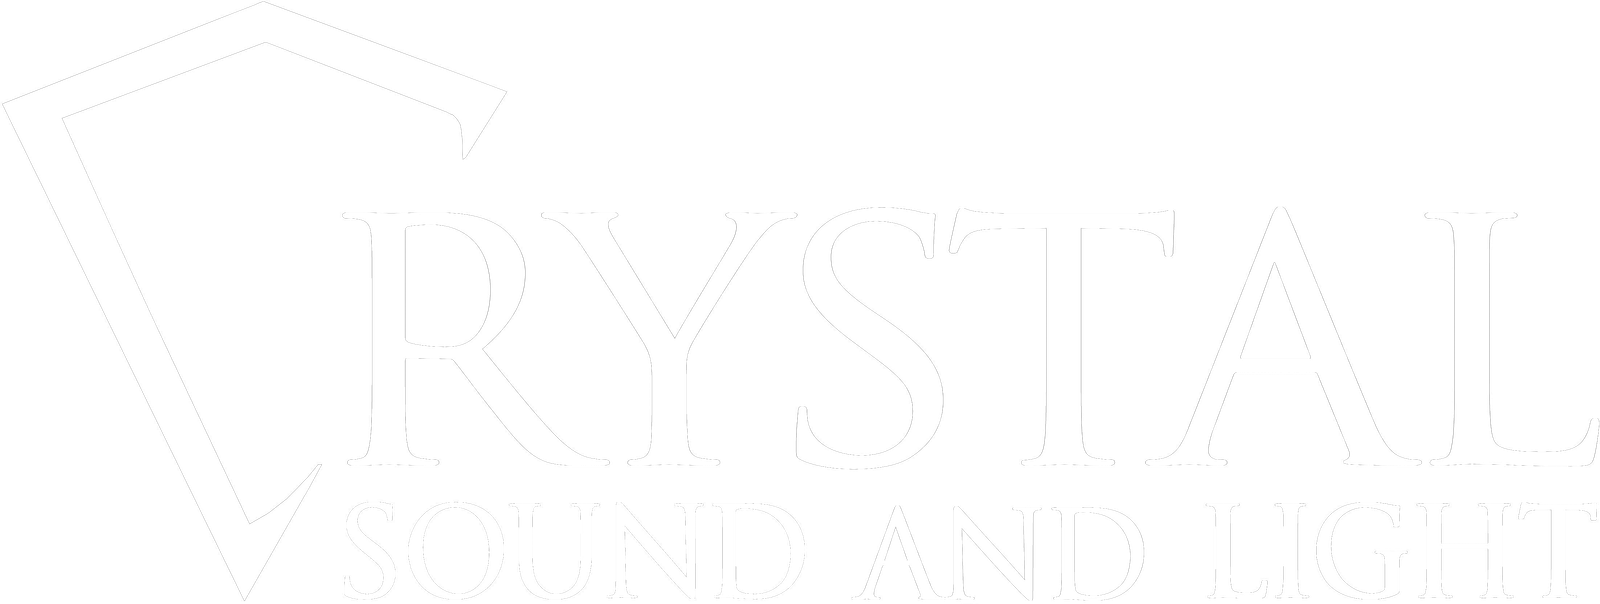 Crystal Sound And Light Ltd